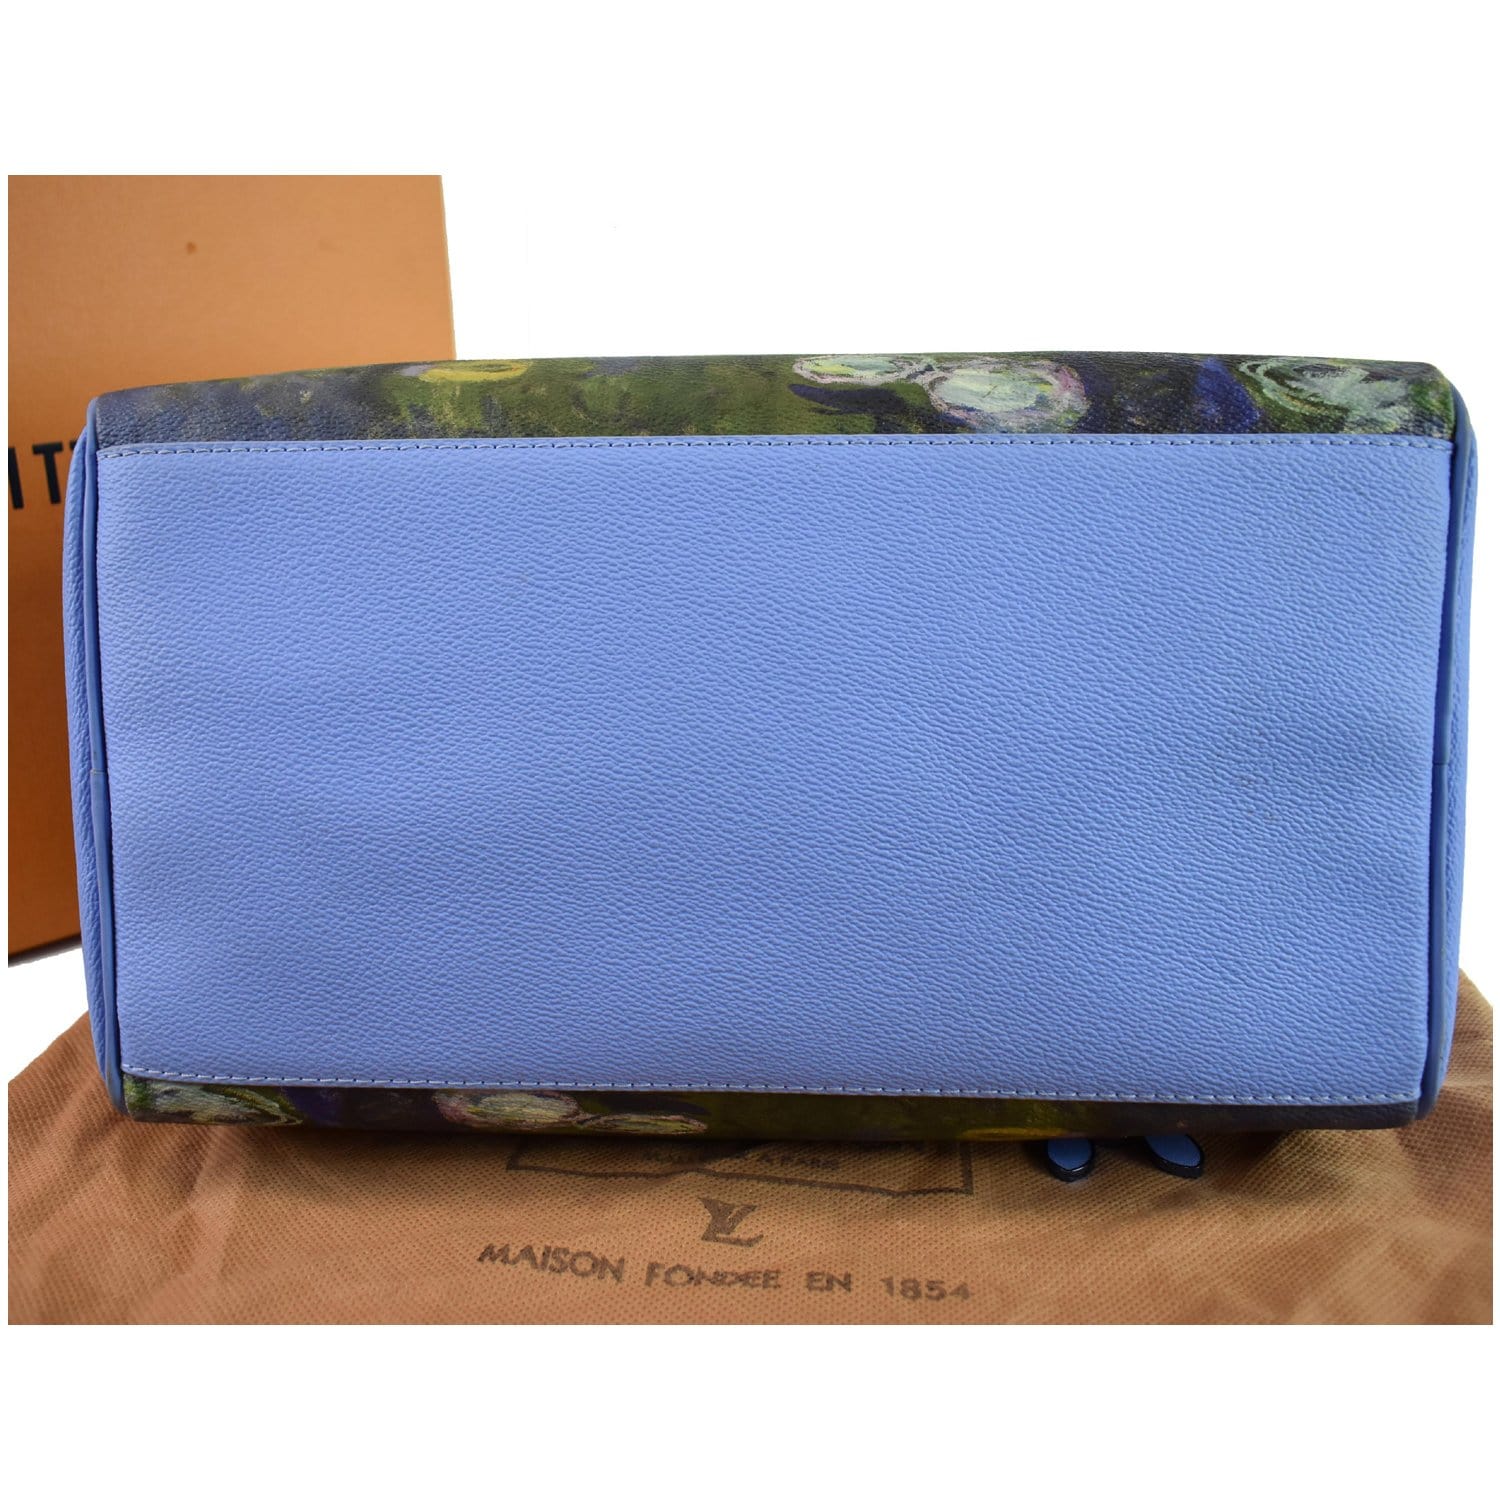 LOUIS VUITTON monet speedy 30 Handbag M43354 Masters canvas Blue